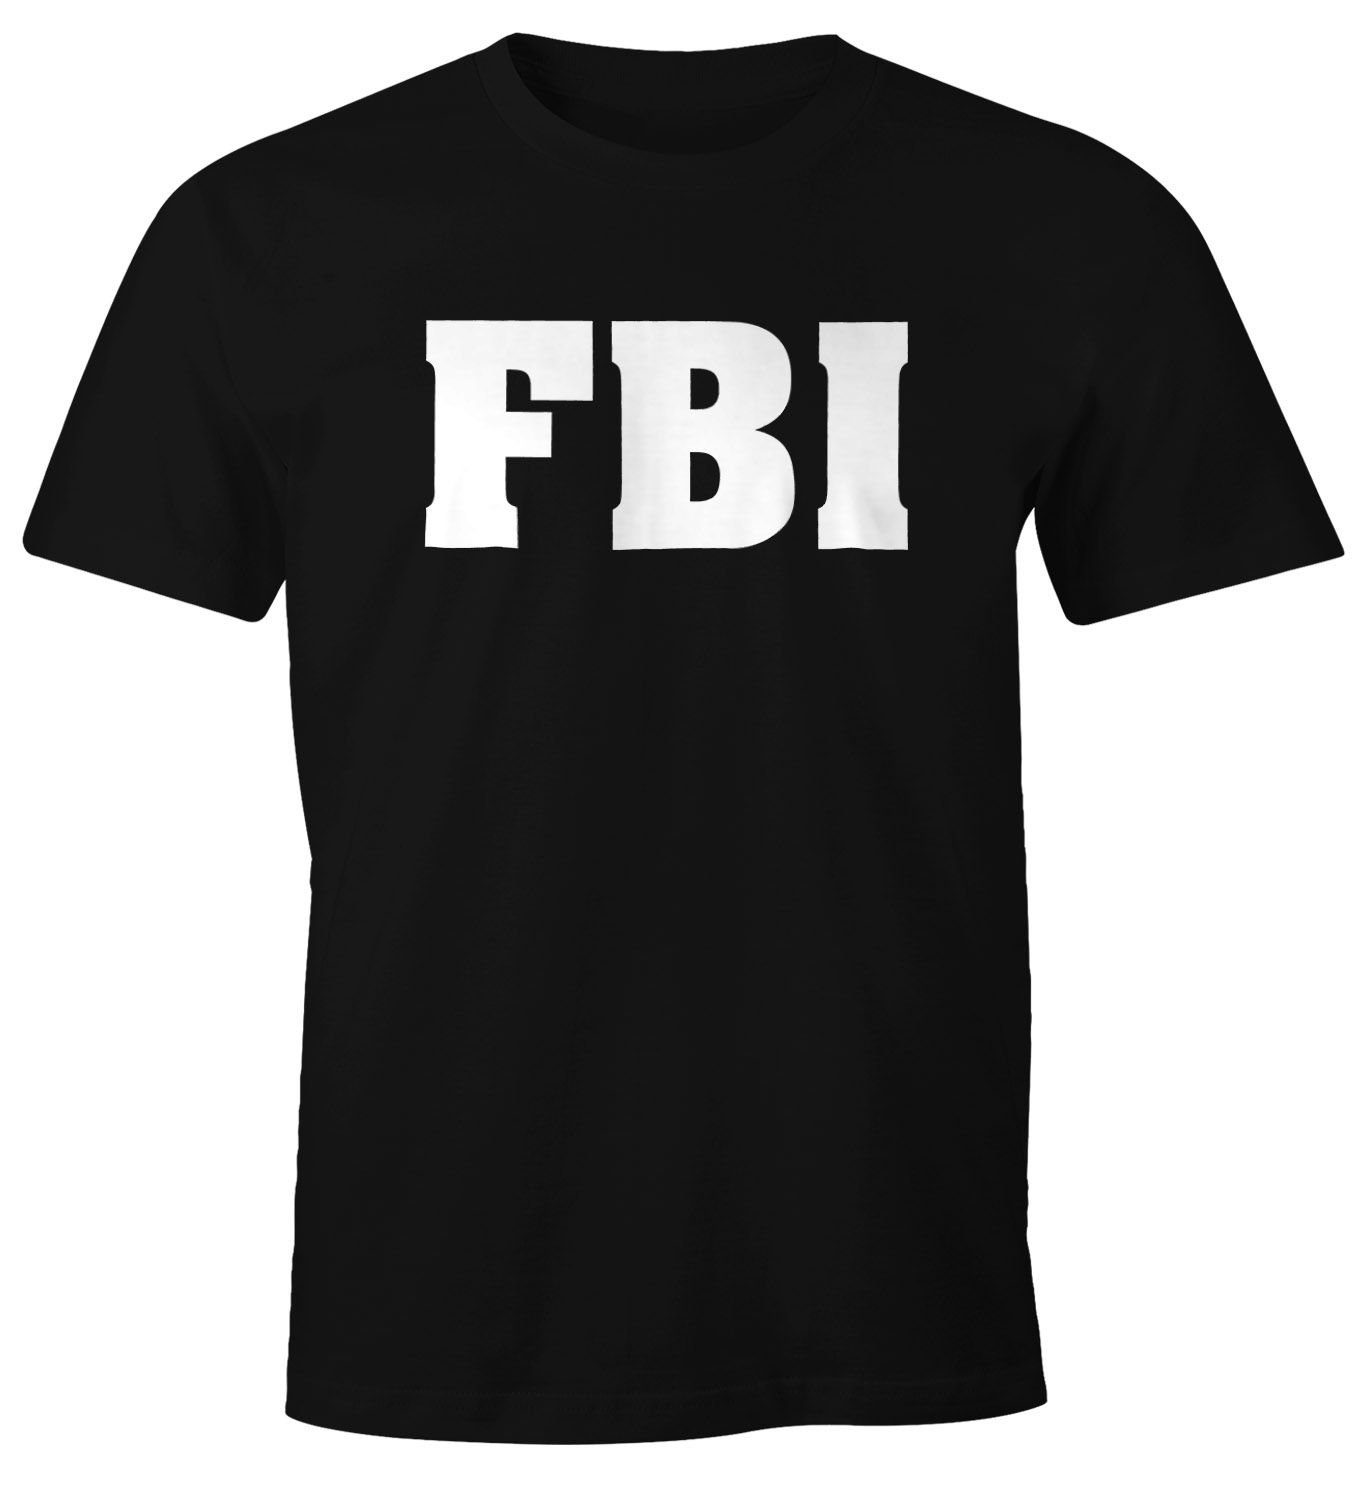 Fun-Shirt Verkleidung Moonworks® mit Kostüm Print Print-Shirt MoonWorks Karneval Faschings-Shirt T-Shirt Herren FBI Aufdruck